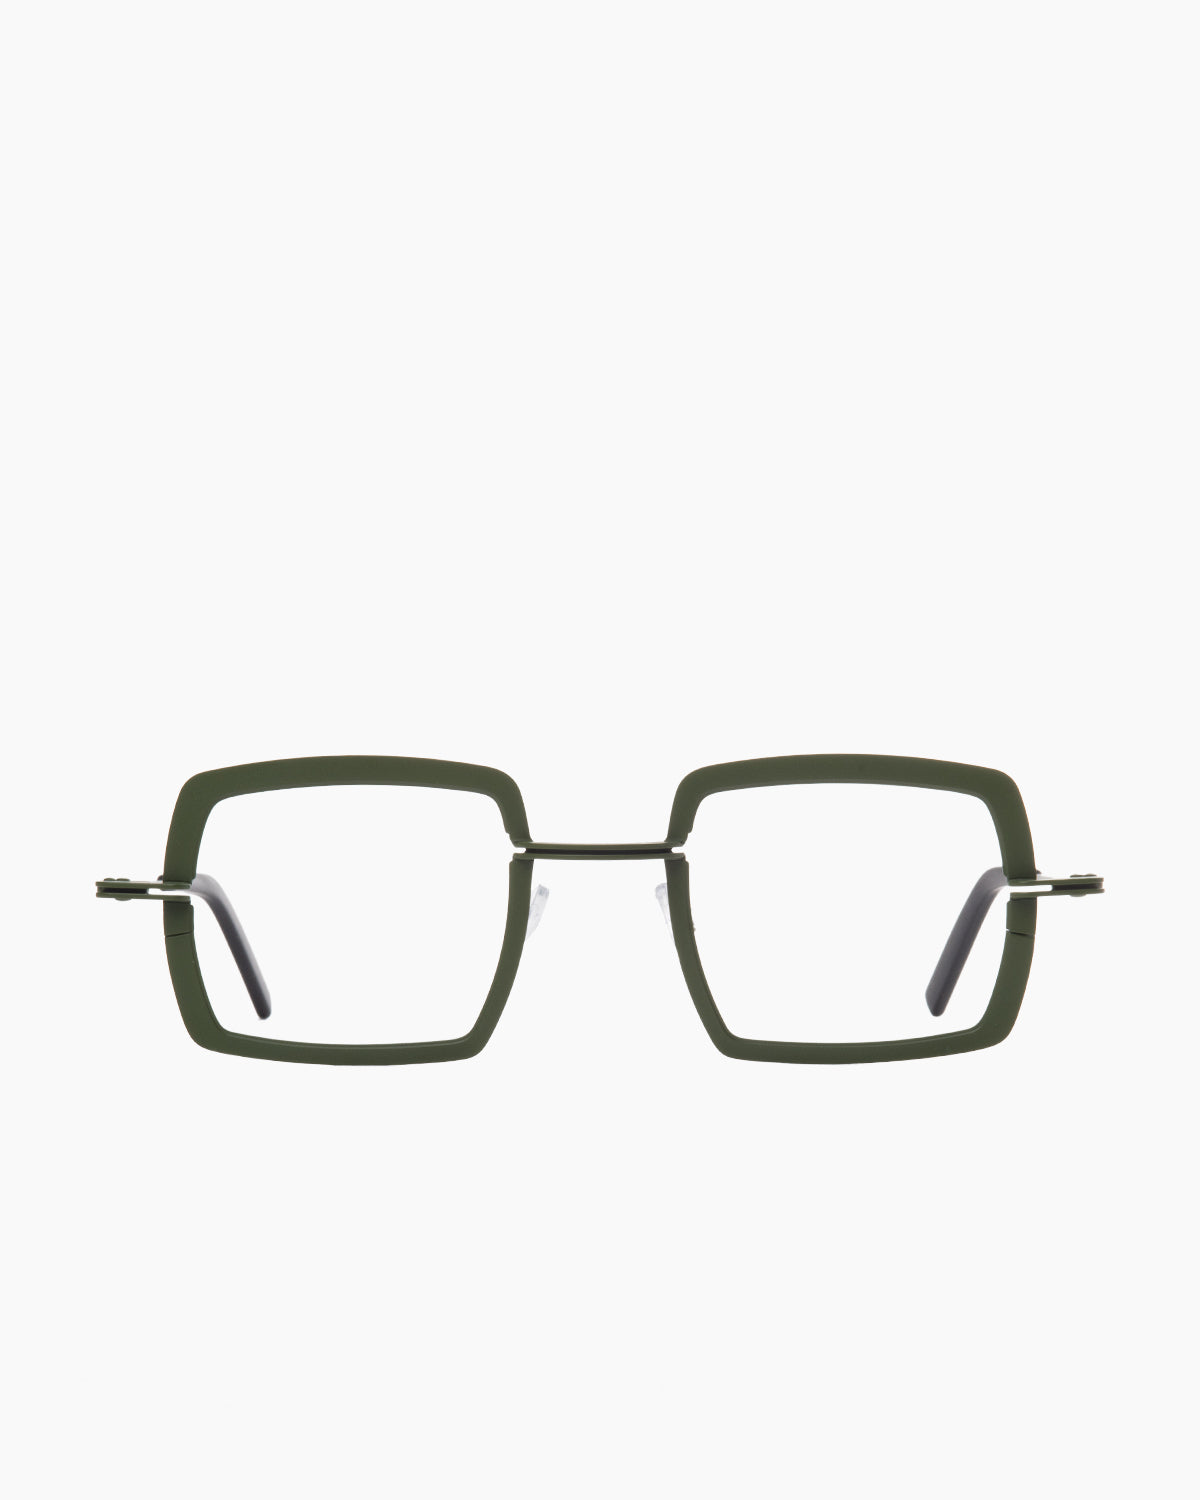 Theo - super - 184 | Bar à lunettes